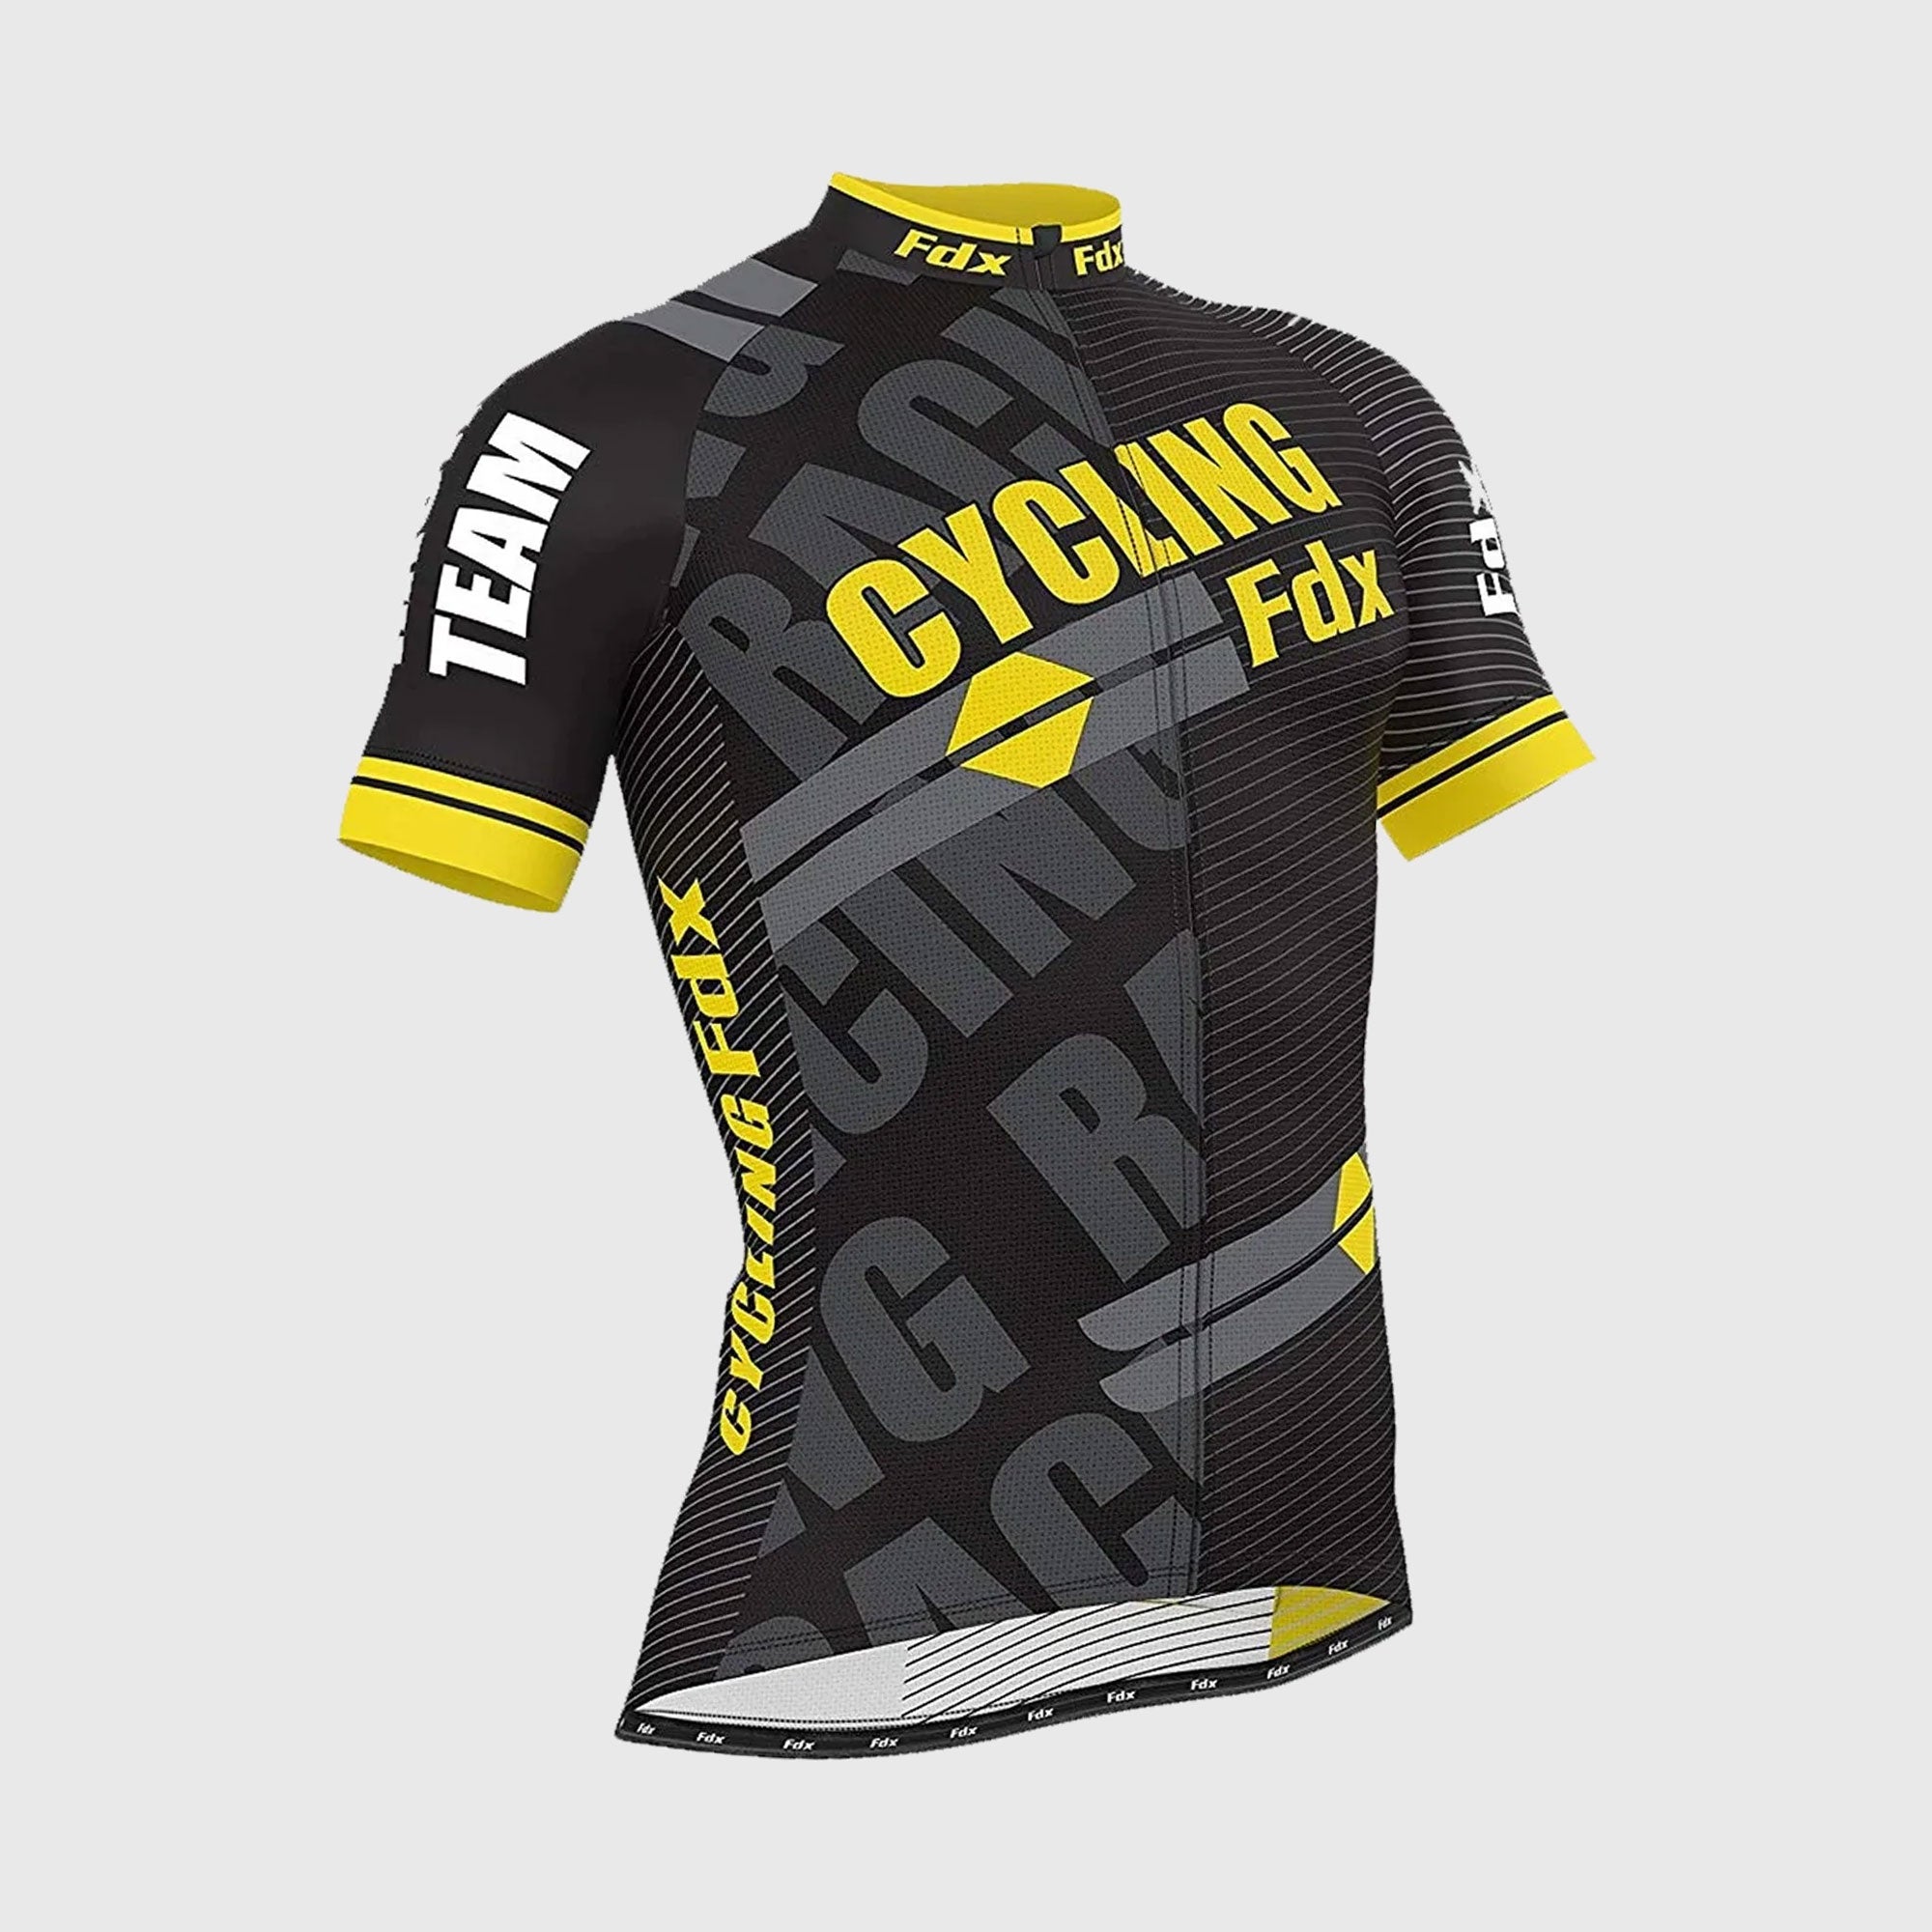 Fdx Core Yellow Men's Short Sleeve Summer Cycling Jersey